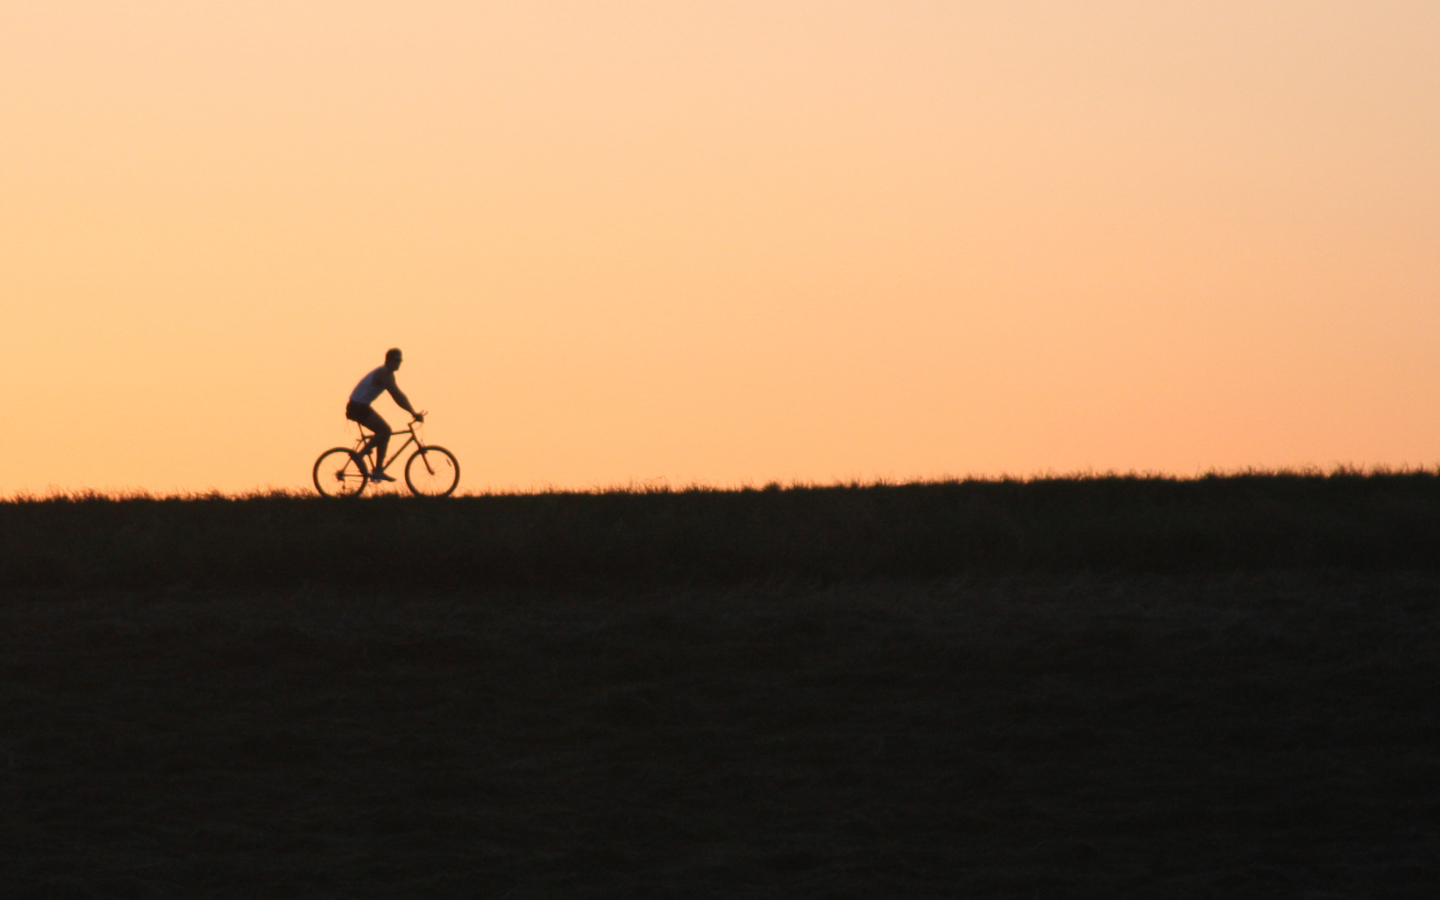 Обои Bicycle Ride In Field 1440x900